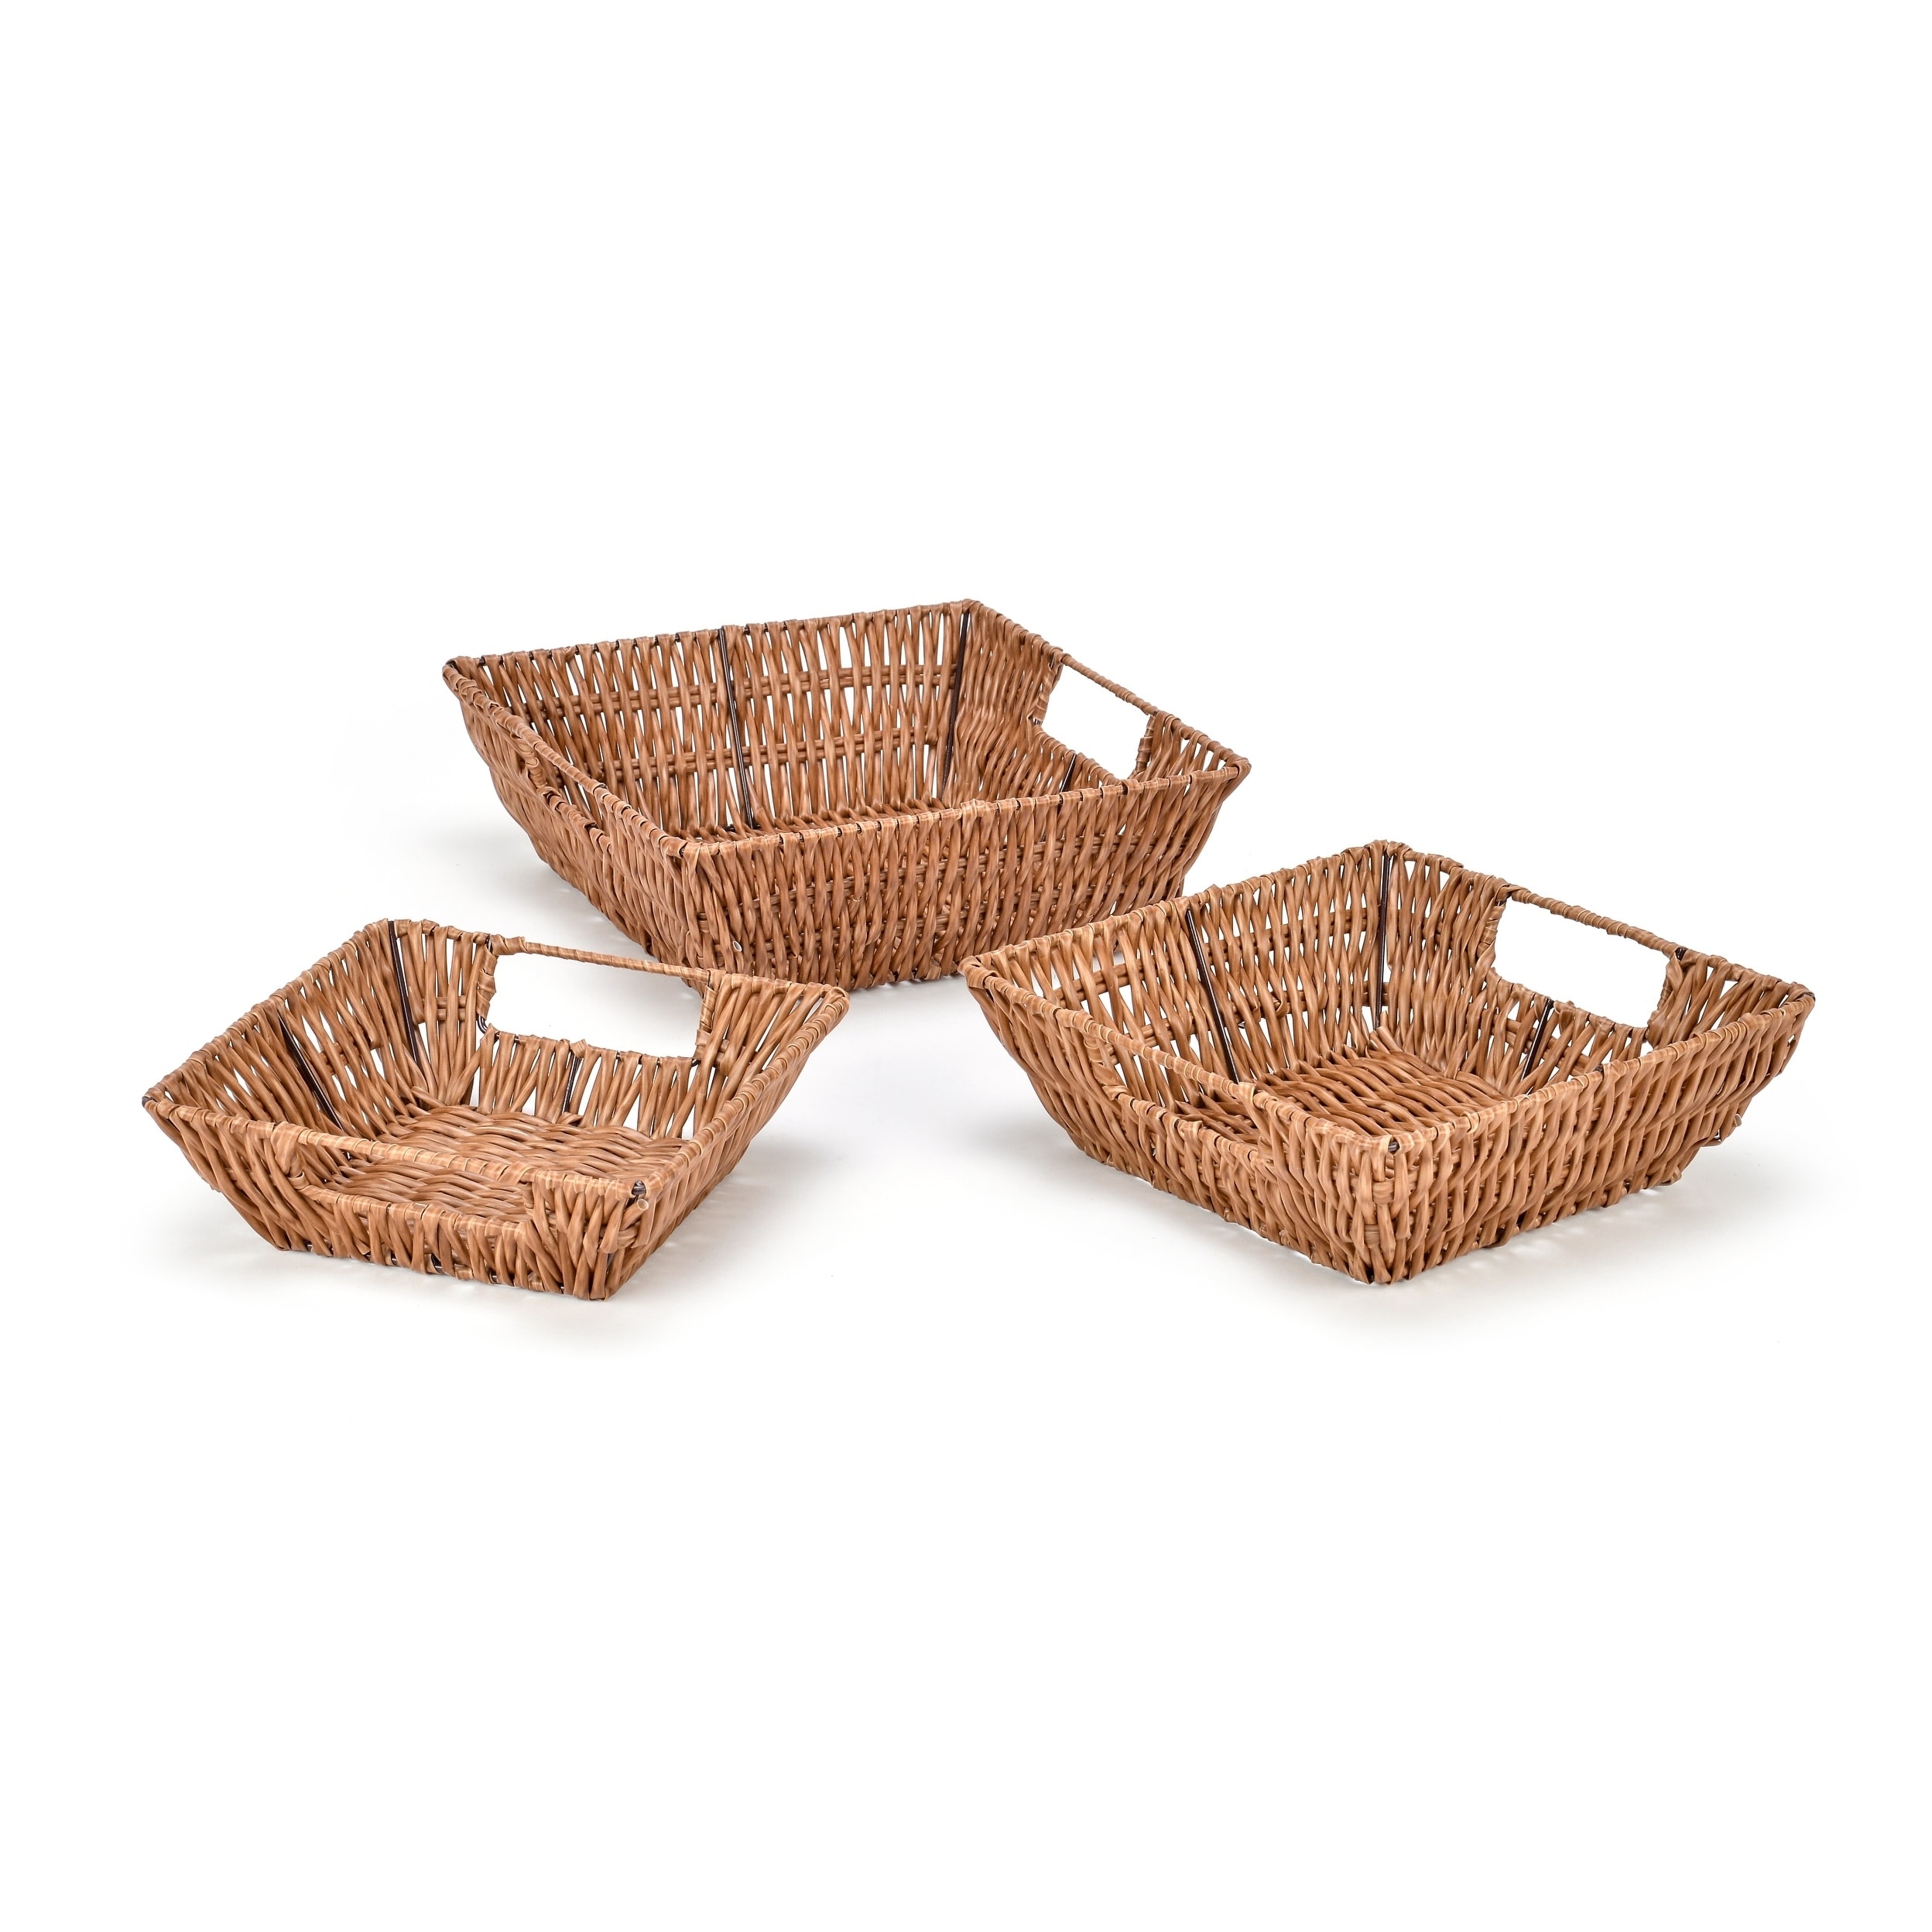 Trademark Innovations Rectangular Seagrass Baskets Lids (Set of 3), Brown